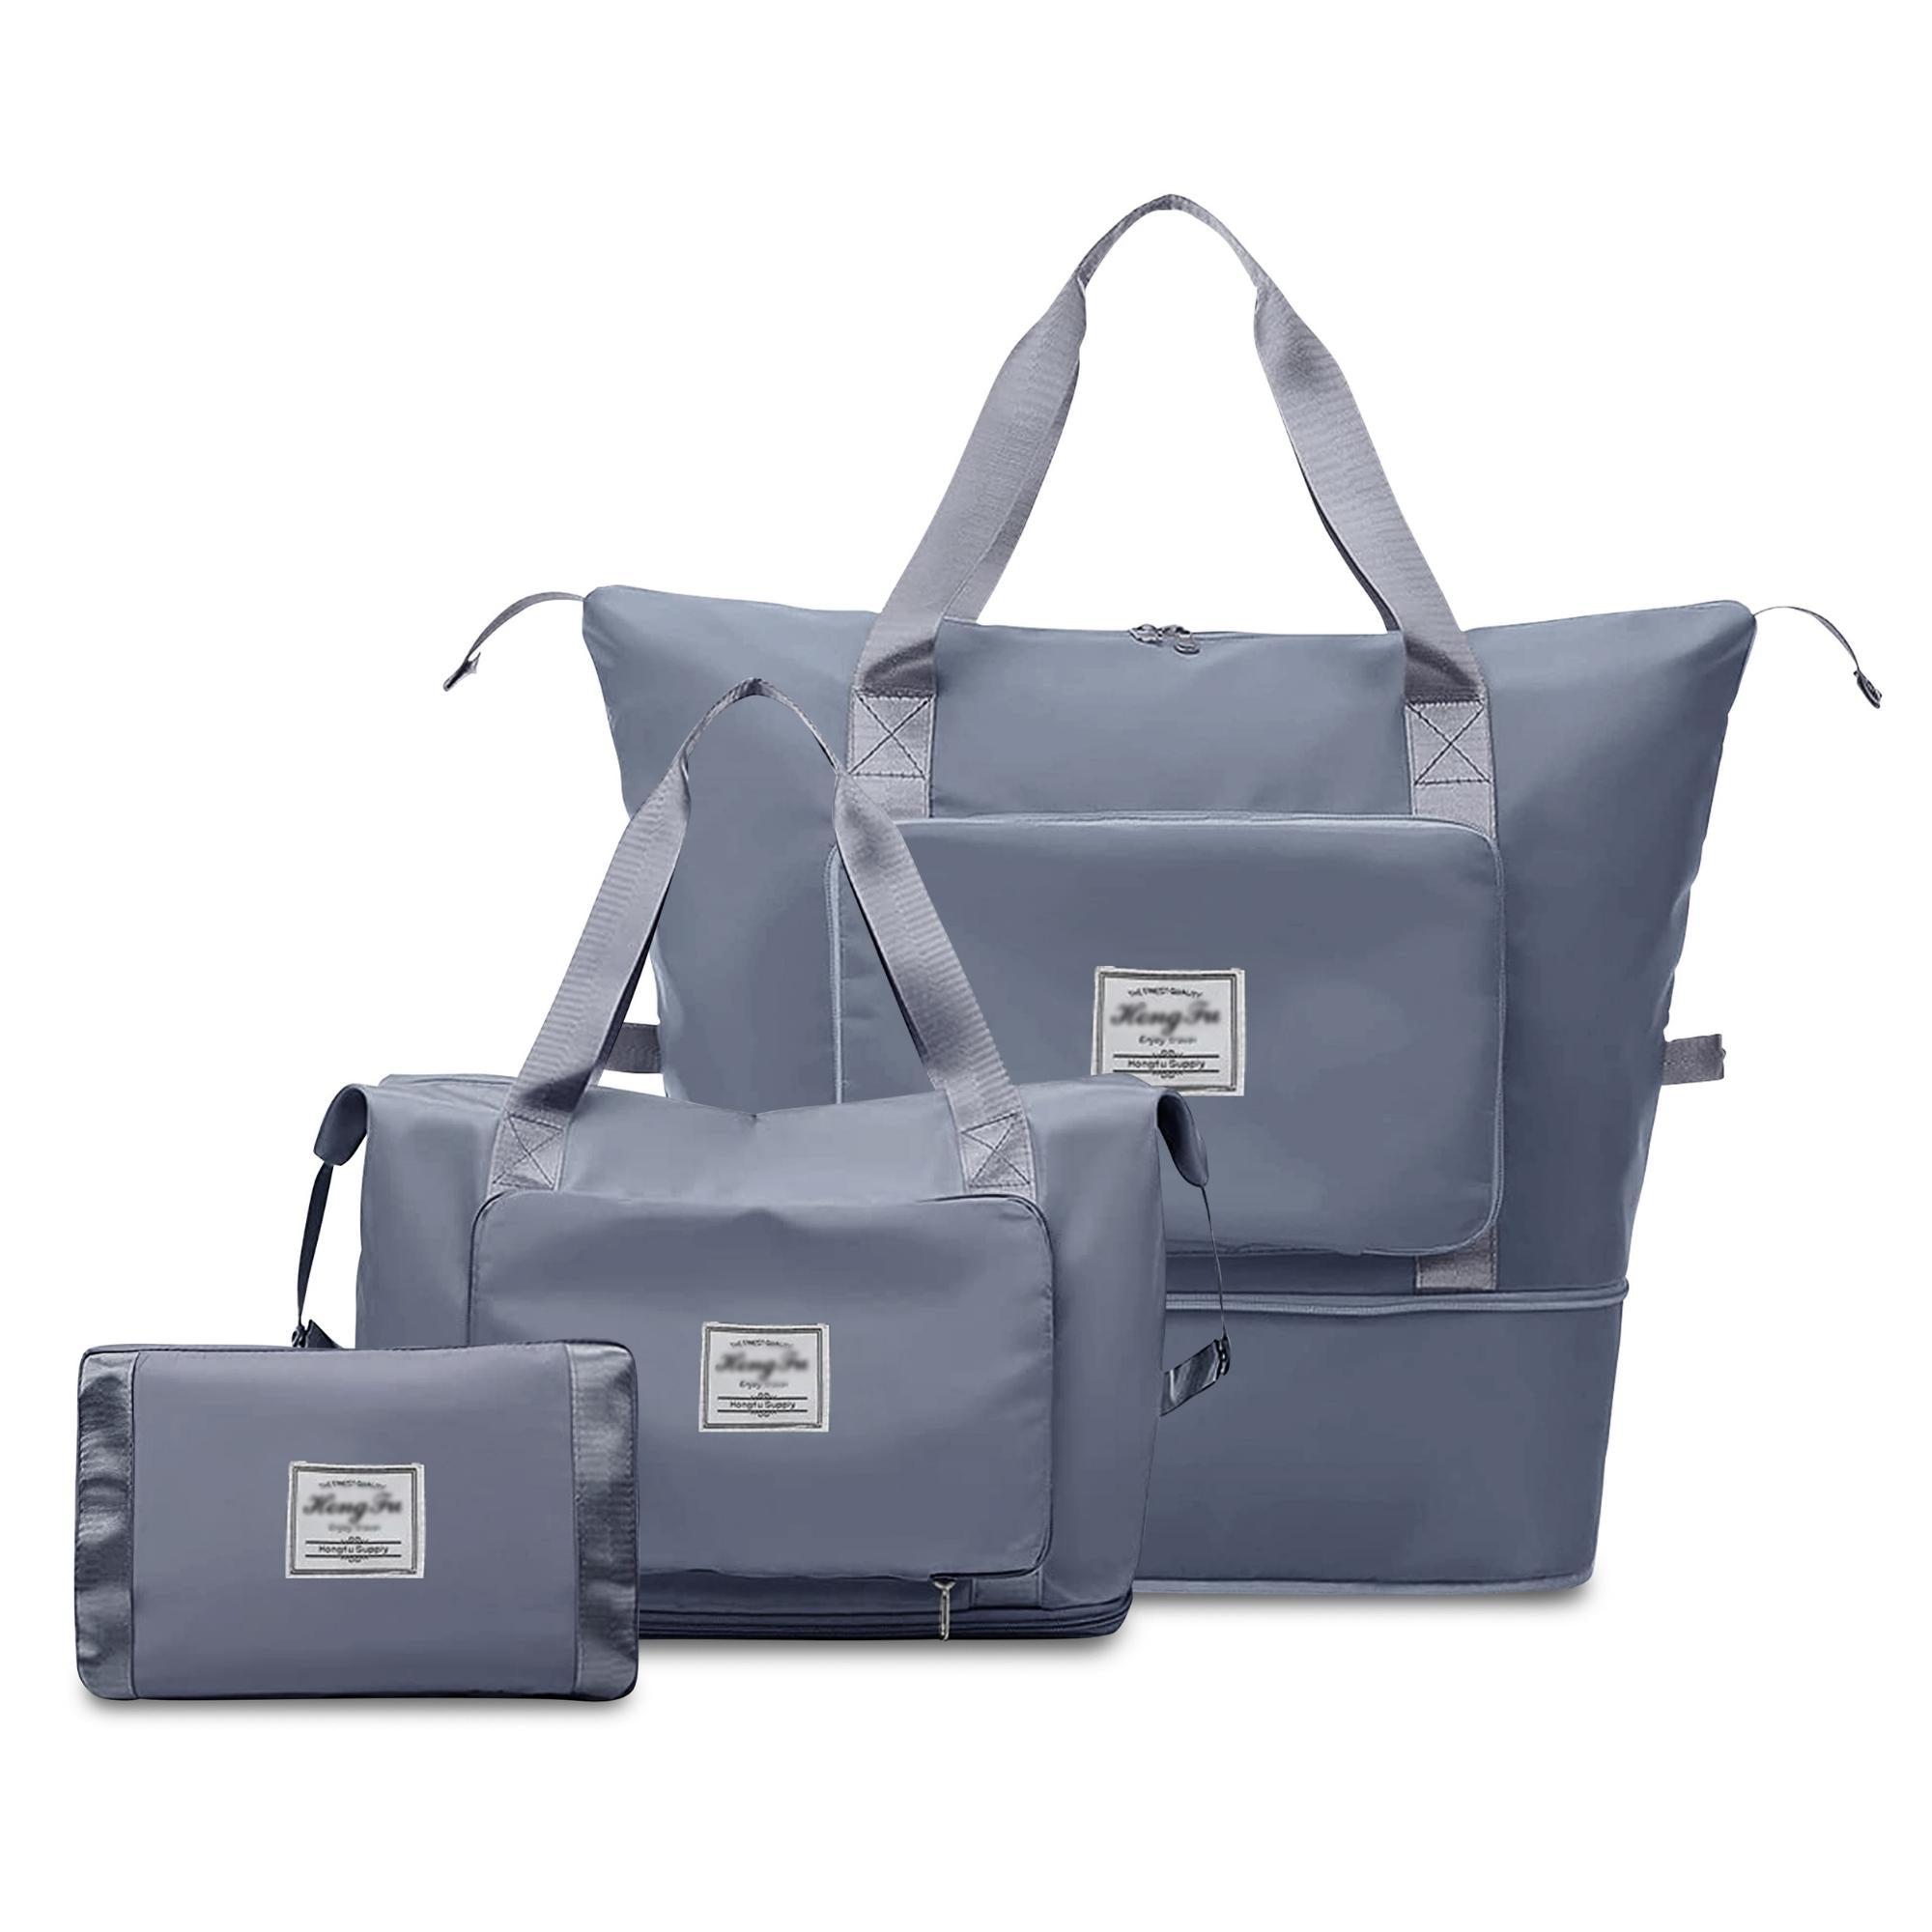 Travel bags: 5542 grey 30L Lite folding travel bag